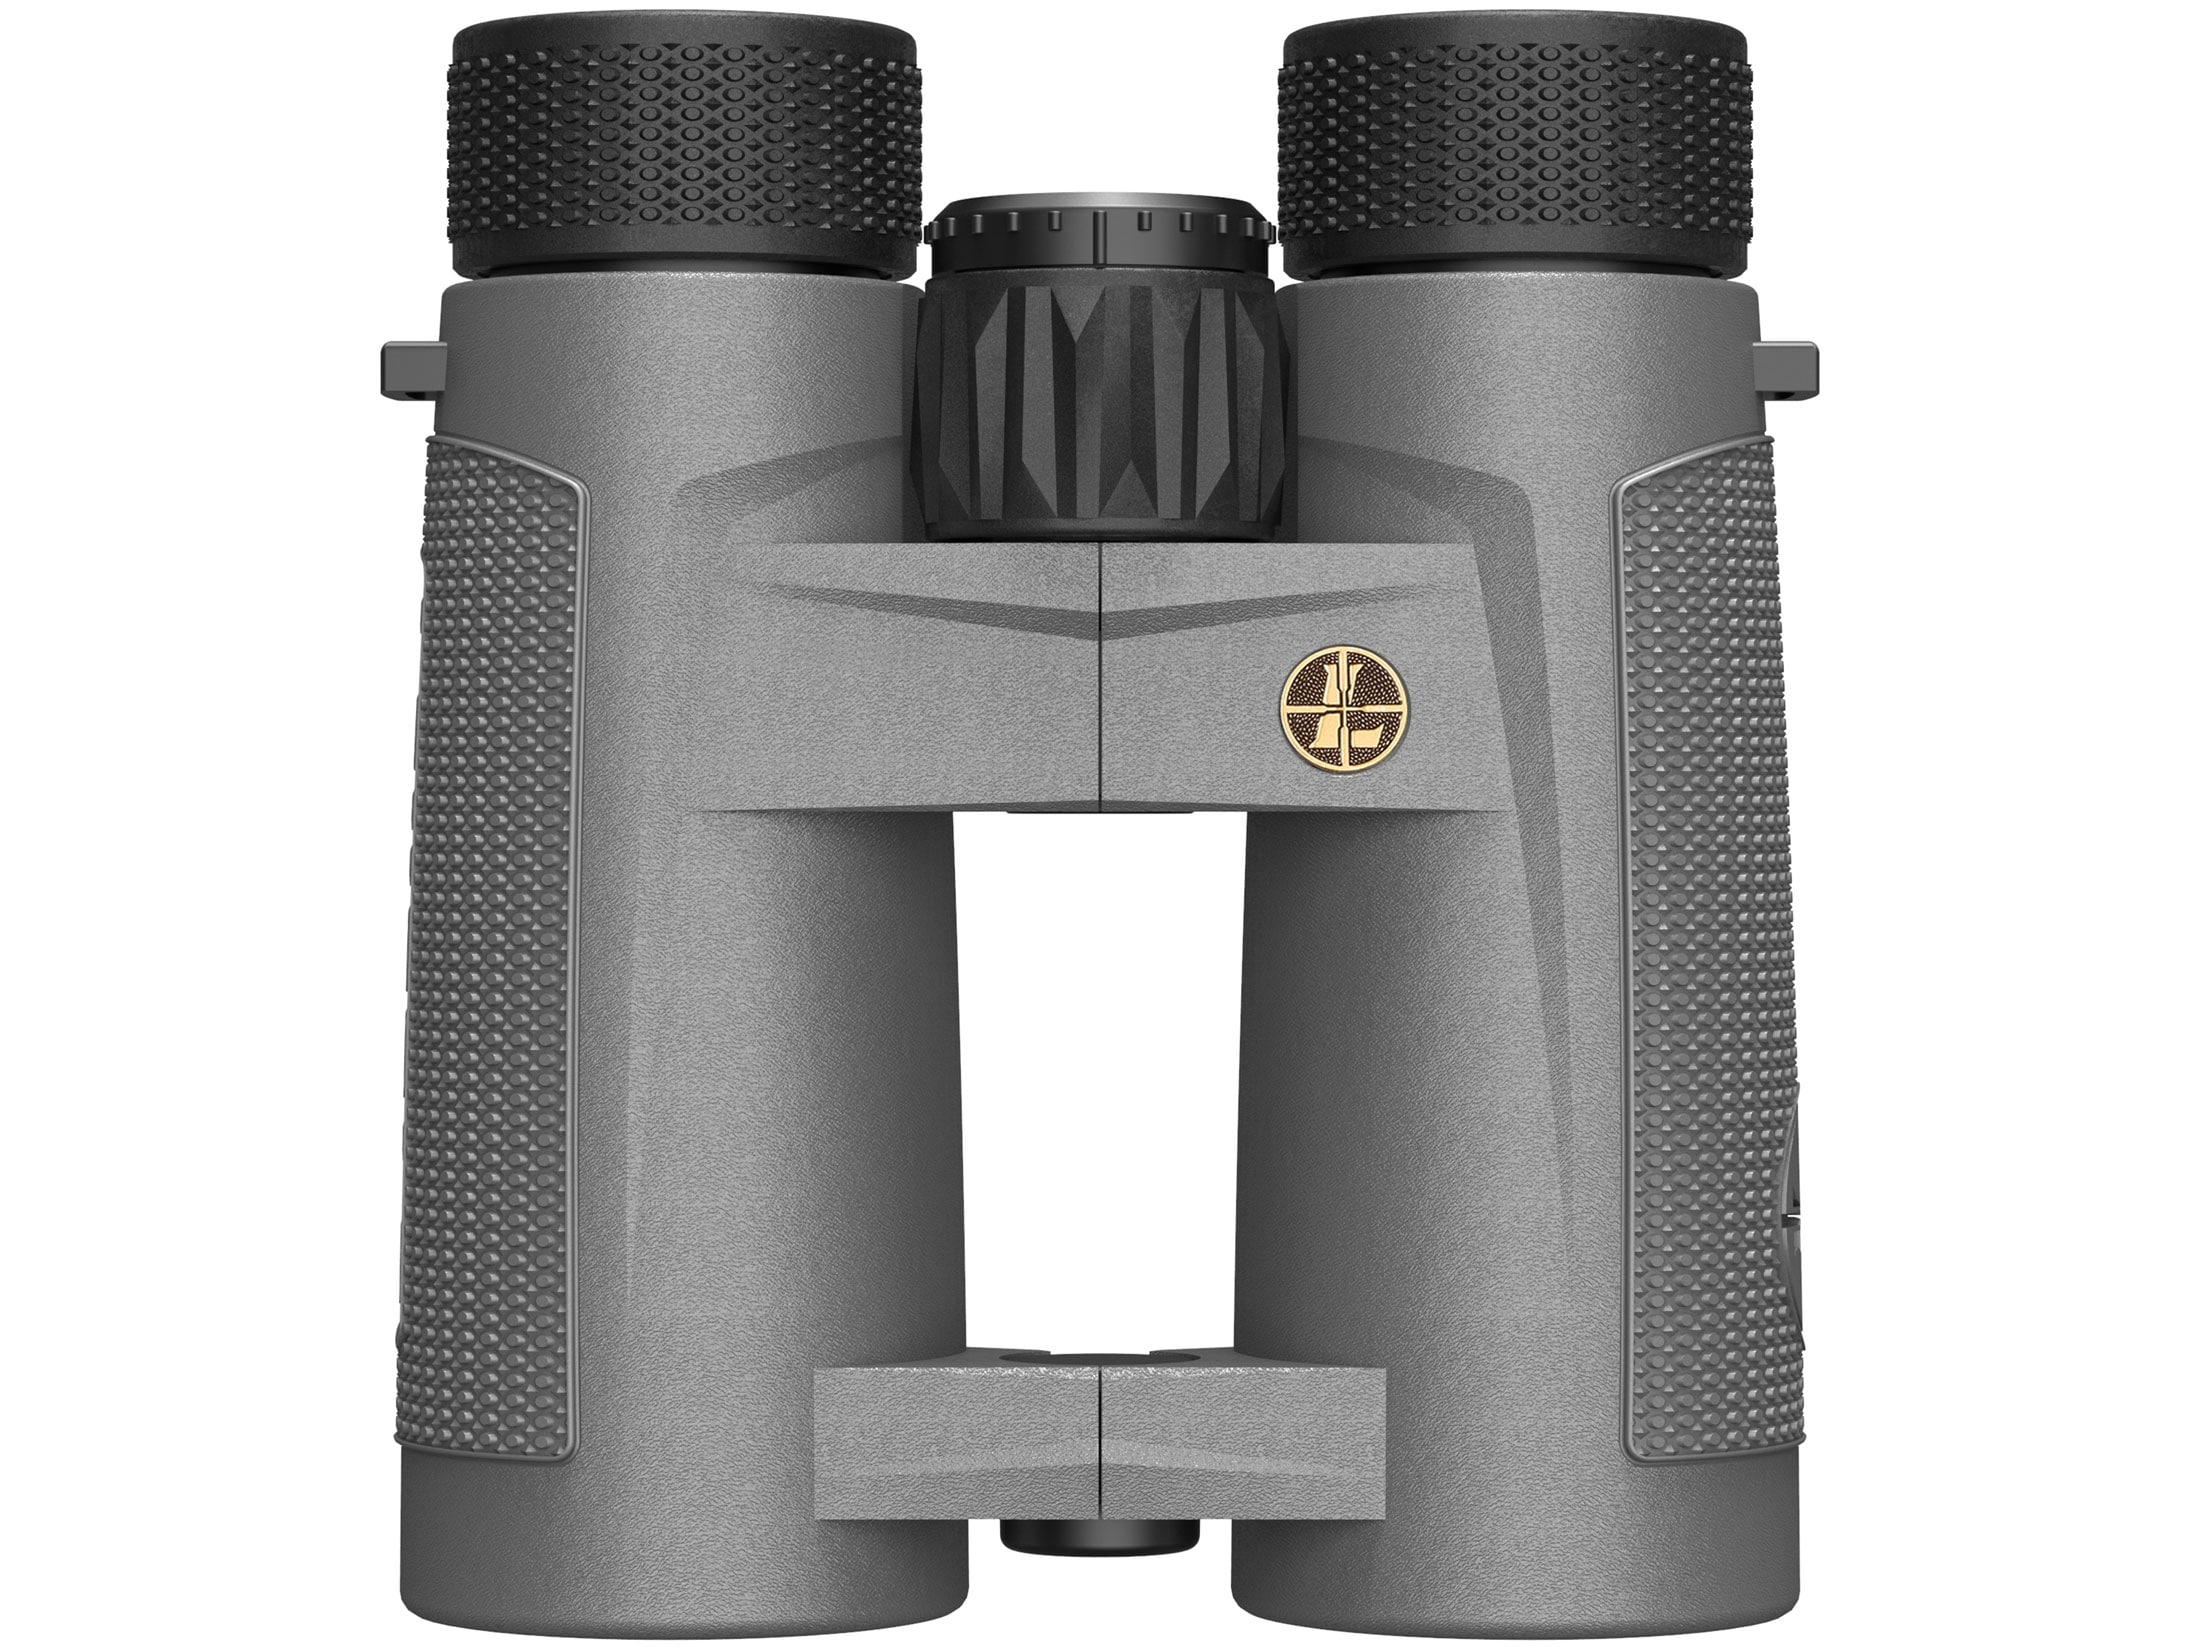 Leupold BX-4 Pro Guide HD Binocular For Sale